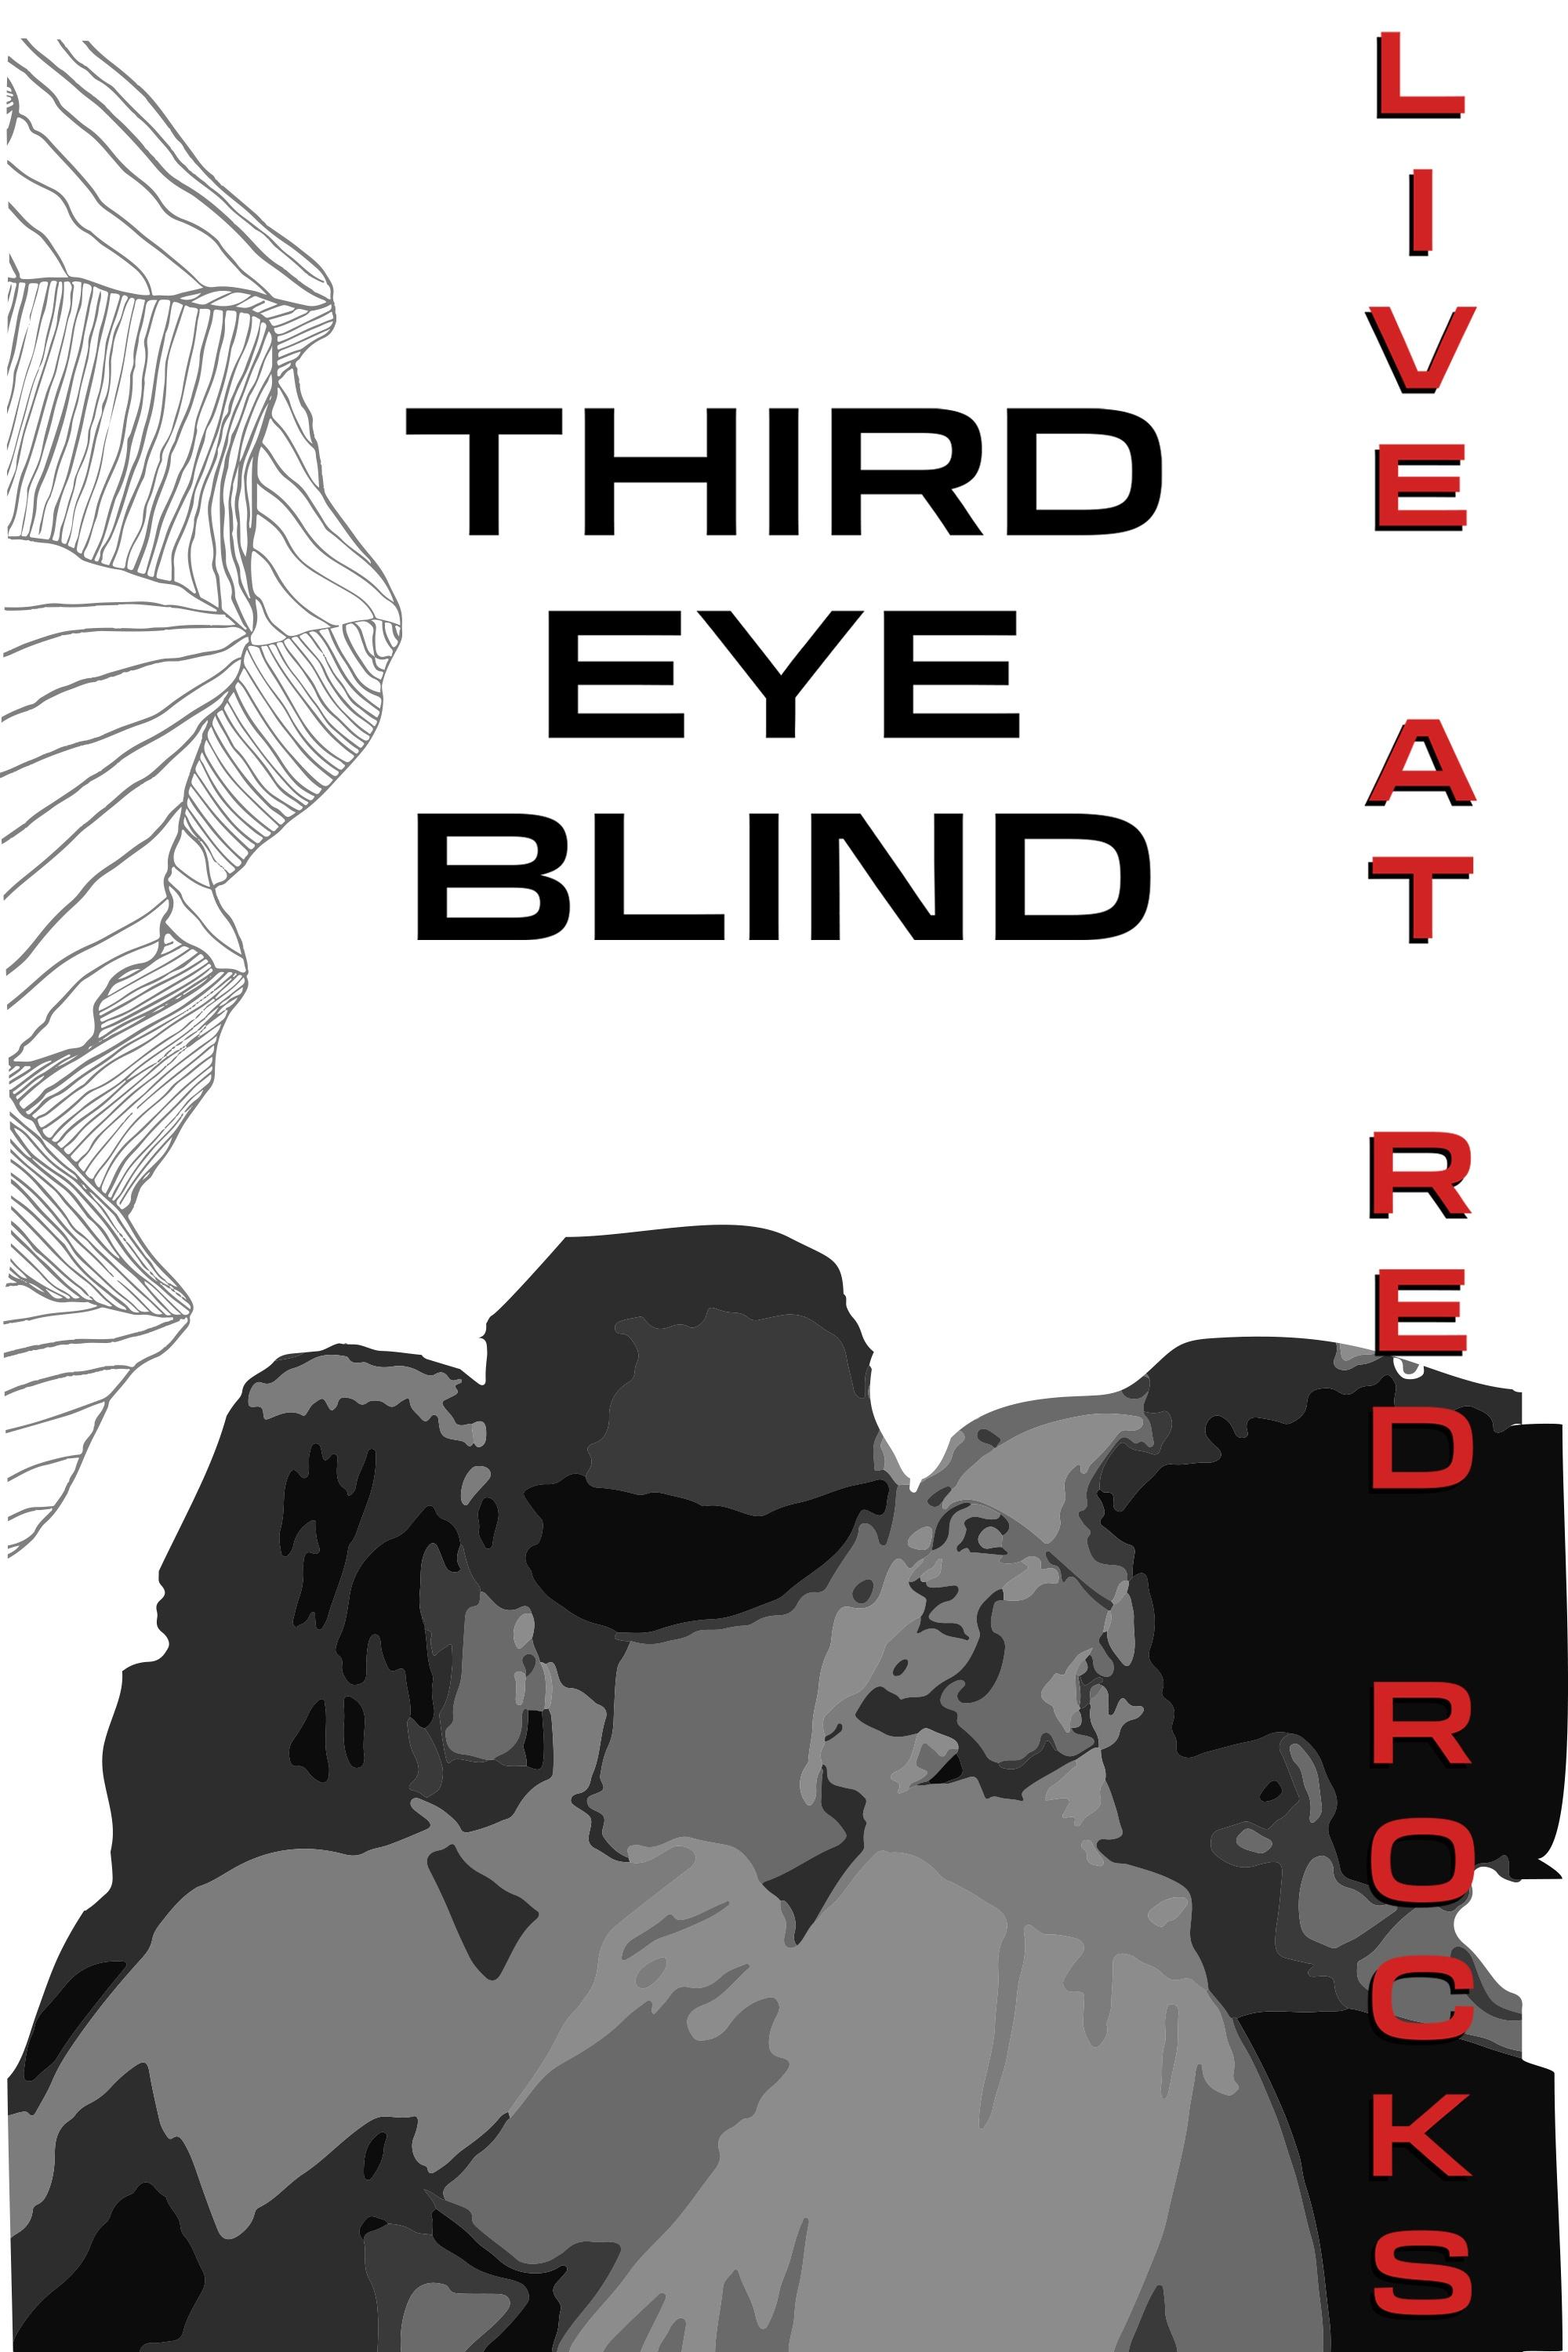 Third Eye Blind – Live at Red Rocks